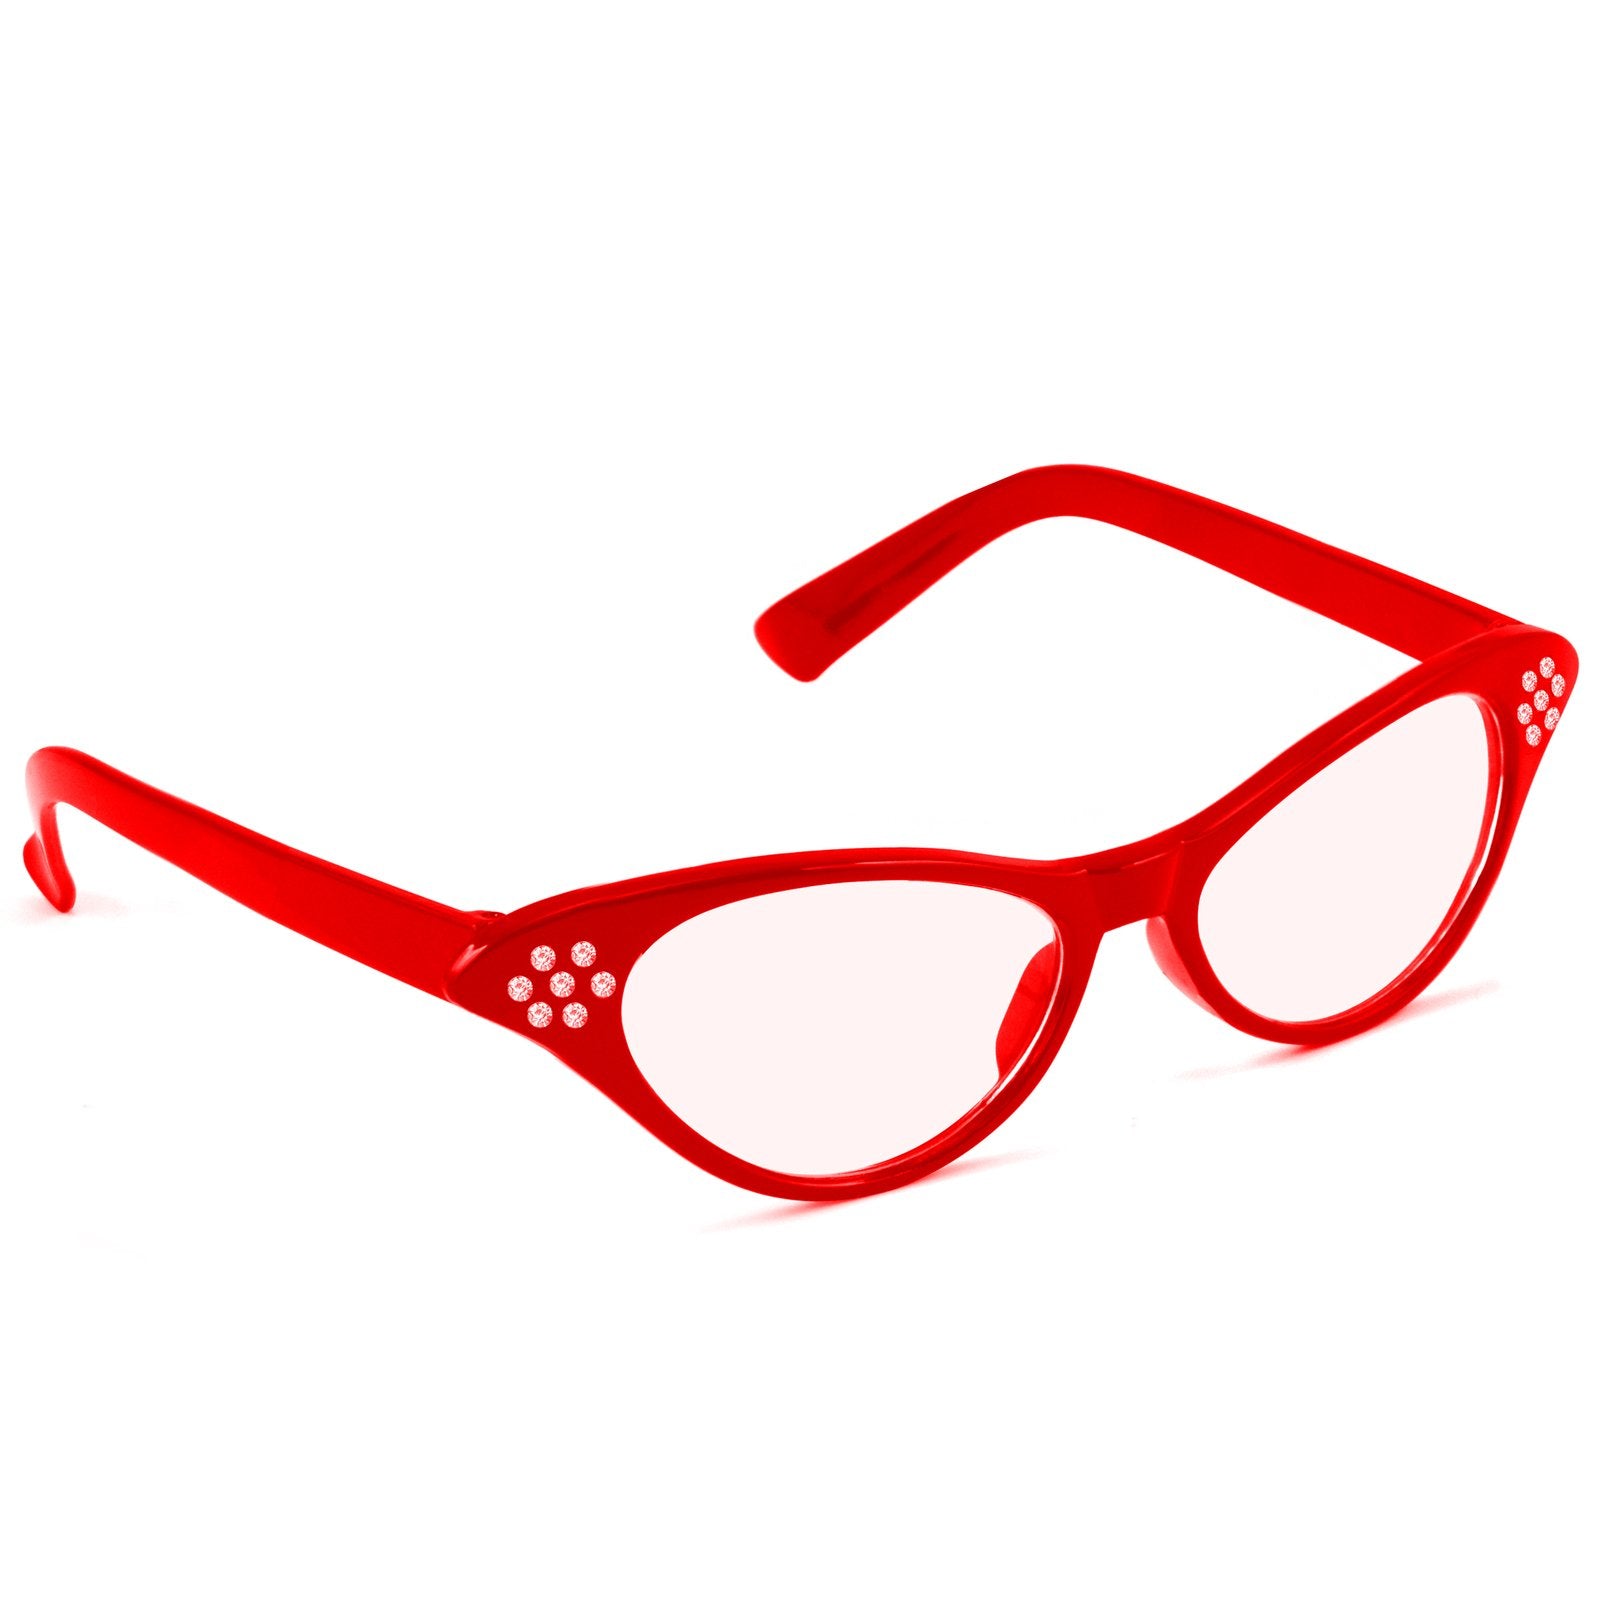 Glasses 1950s Rhinestone Red